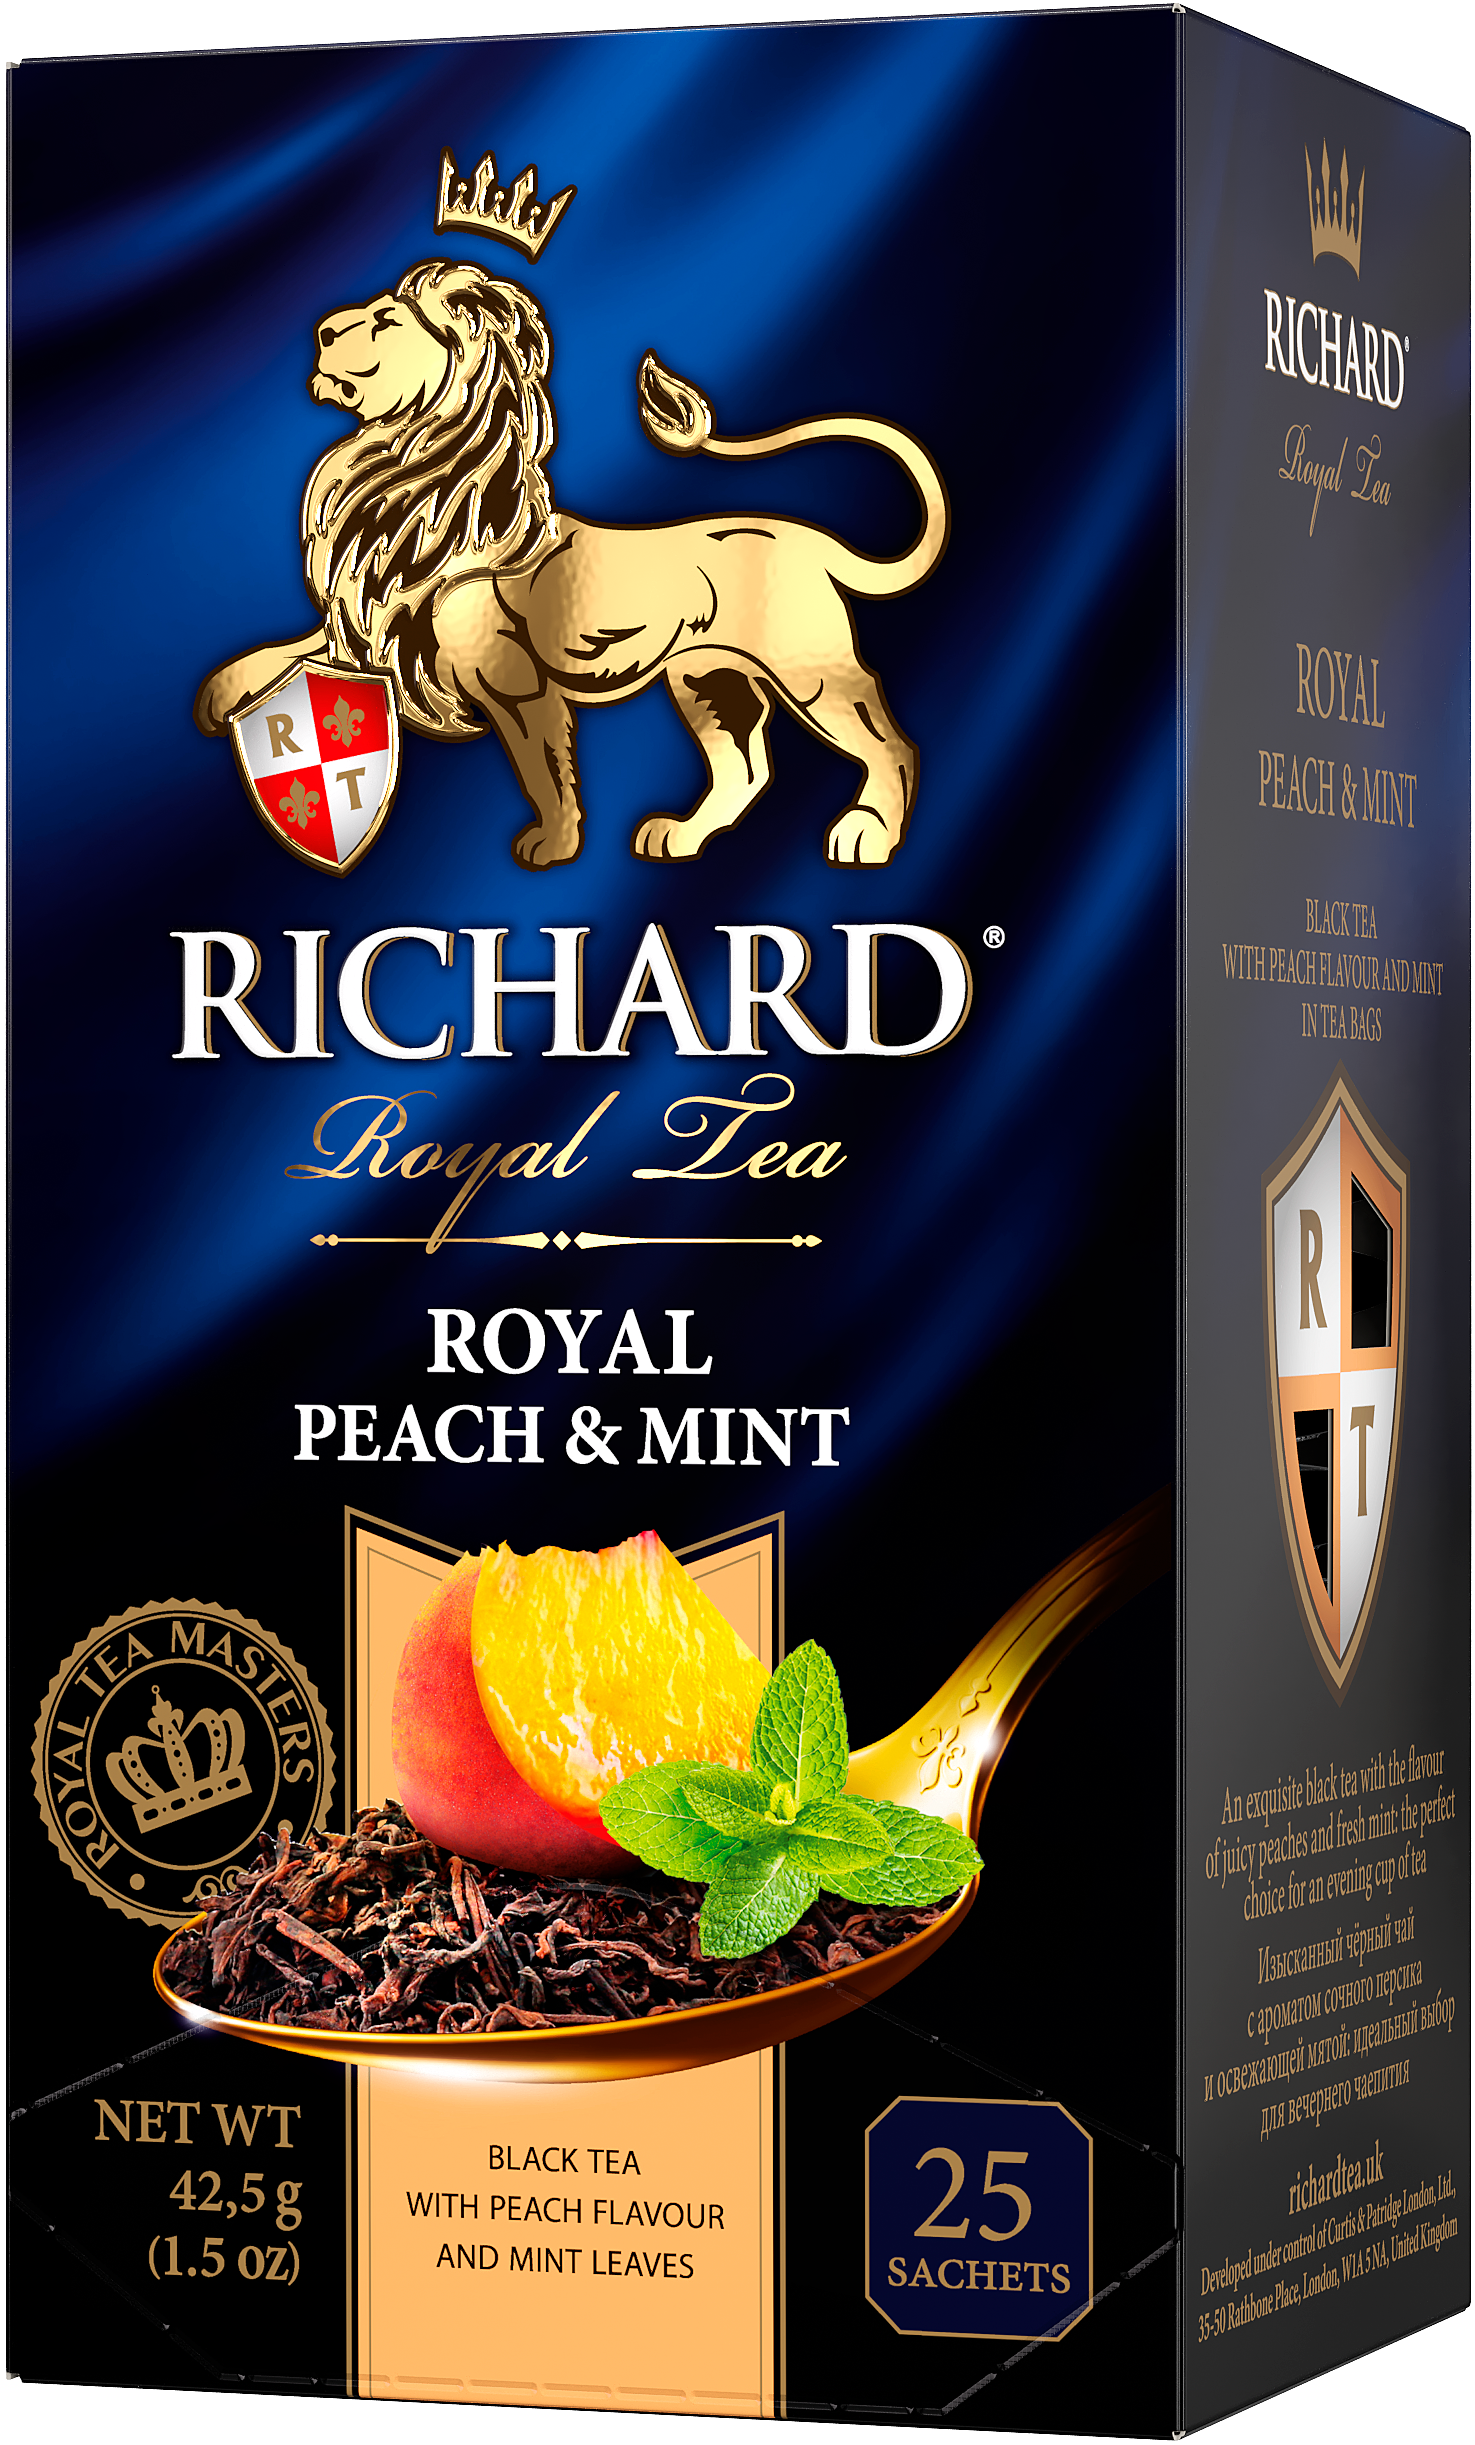 Richard "Royal Peach & Mint" black flavored tea 25 sachets, 42.5g